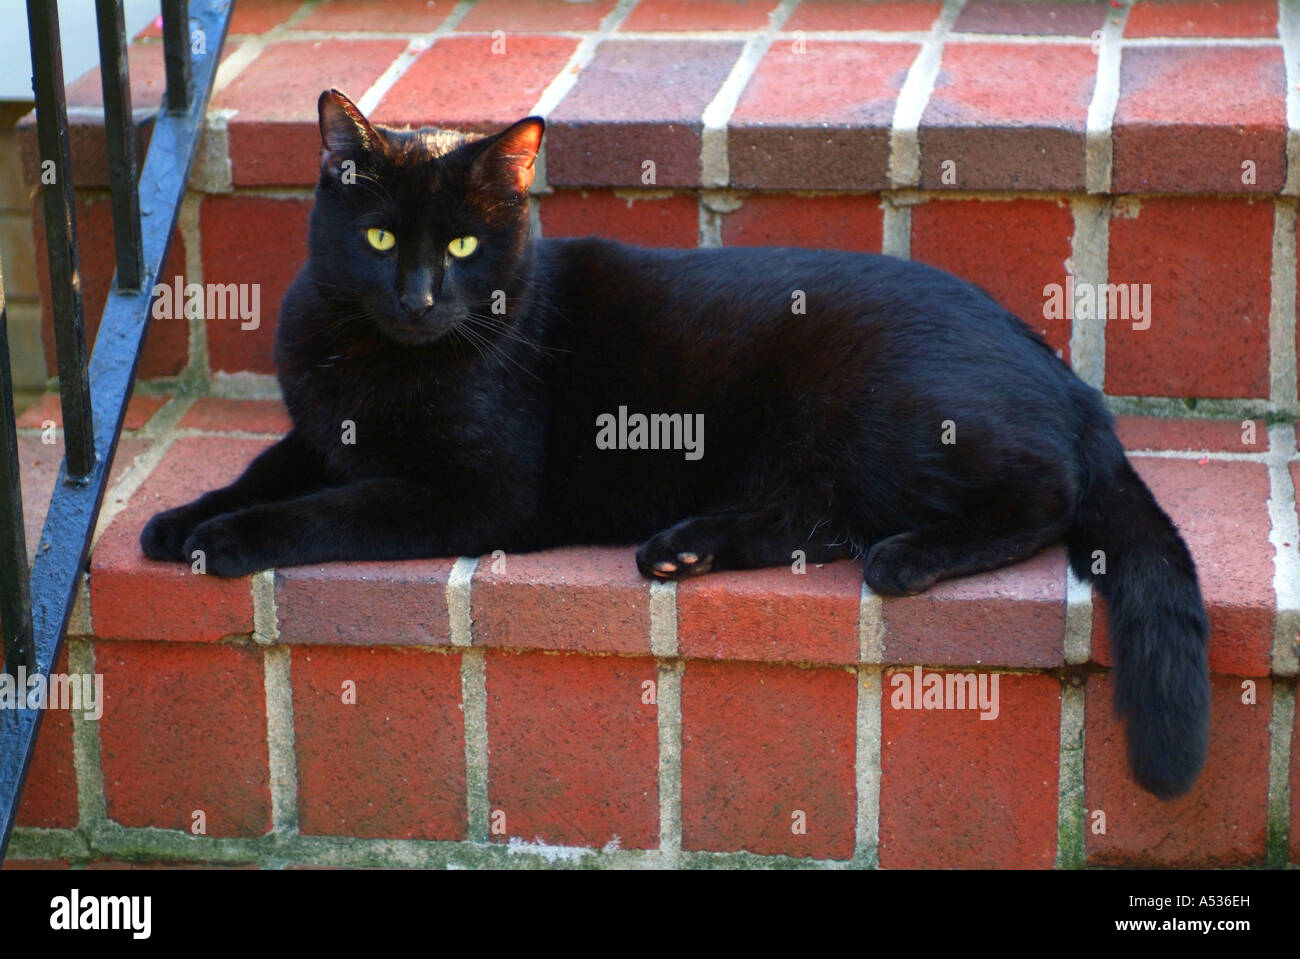 Black house cat outside feline pet on brick steps Stock Photo - Alamy